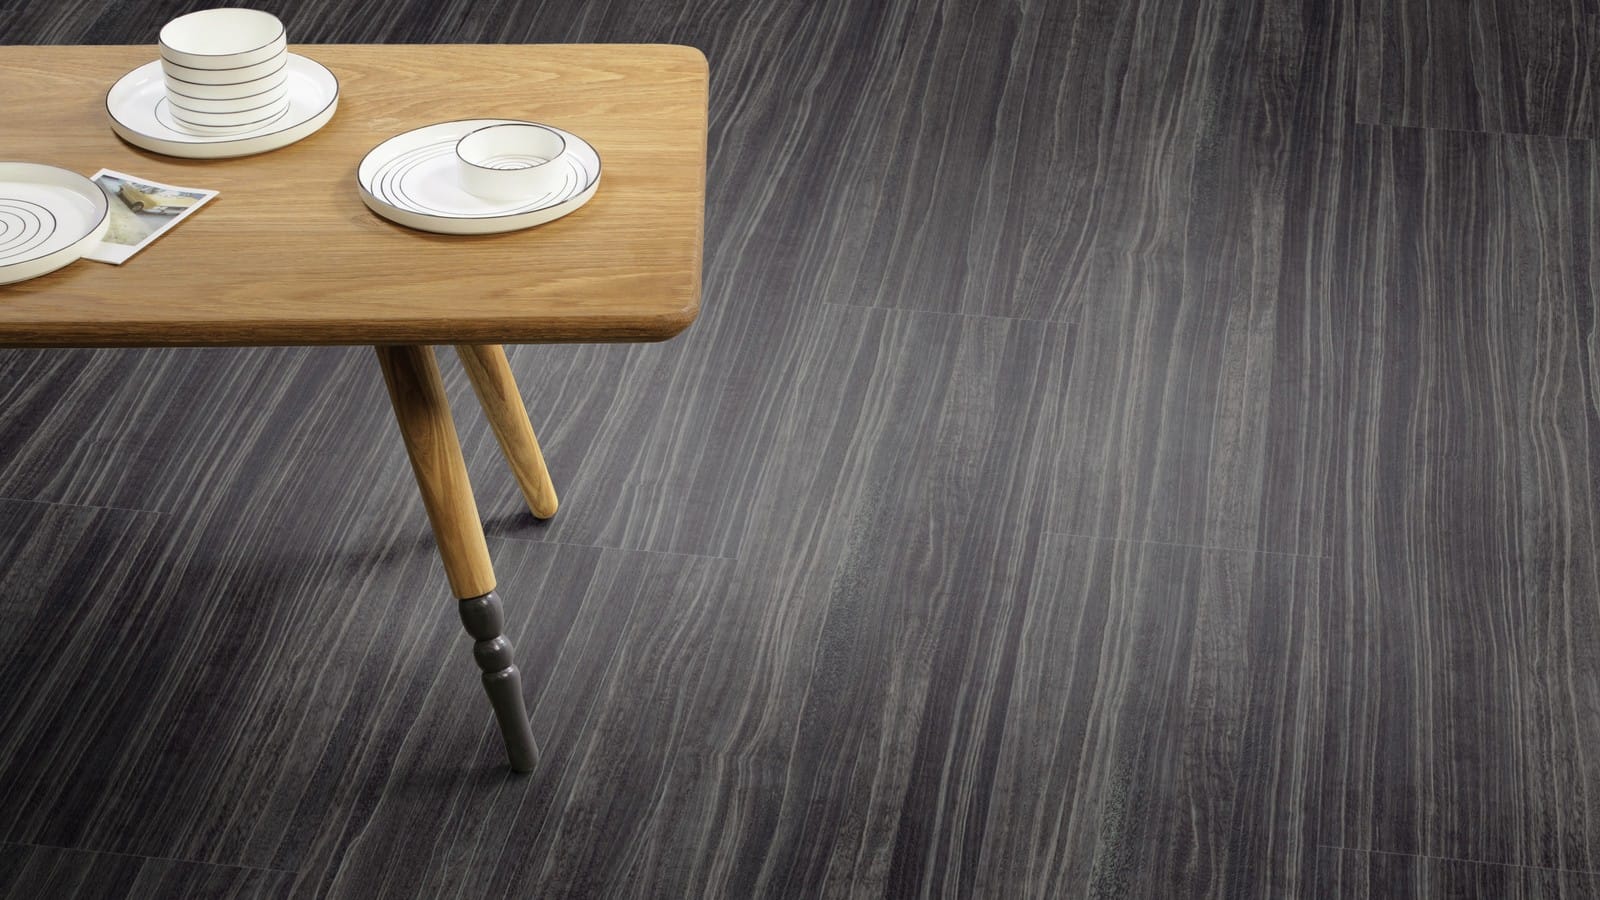 The Stripwood Xtra design of Shibori Lapsang luxury vinyl tile by Amtico